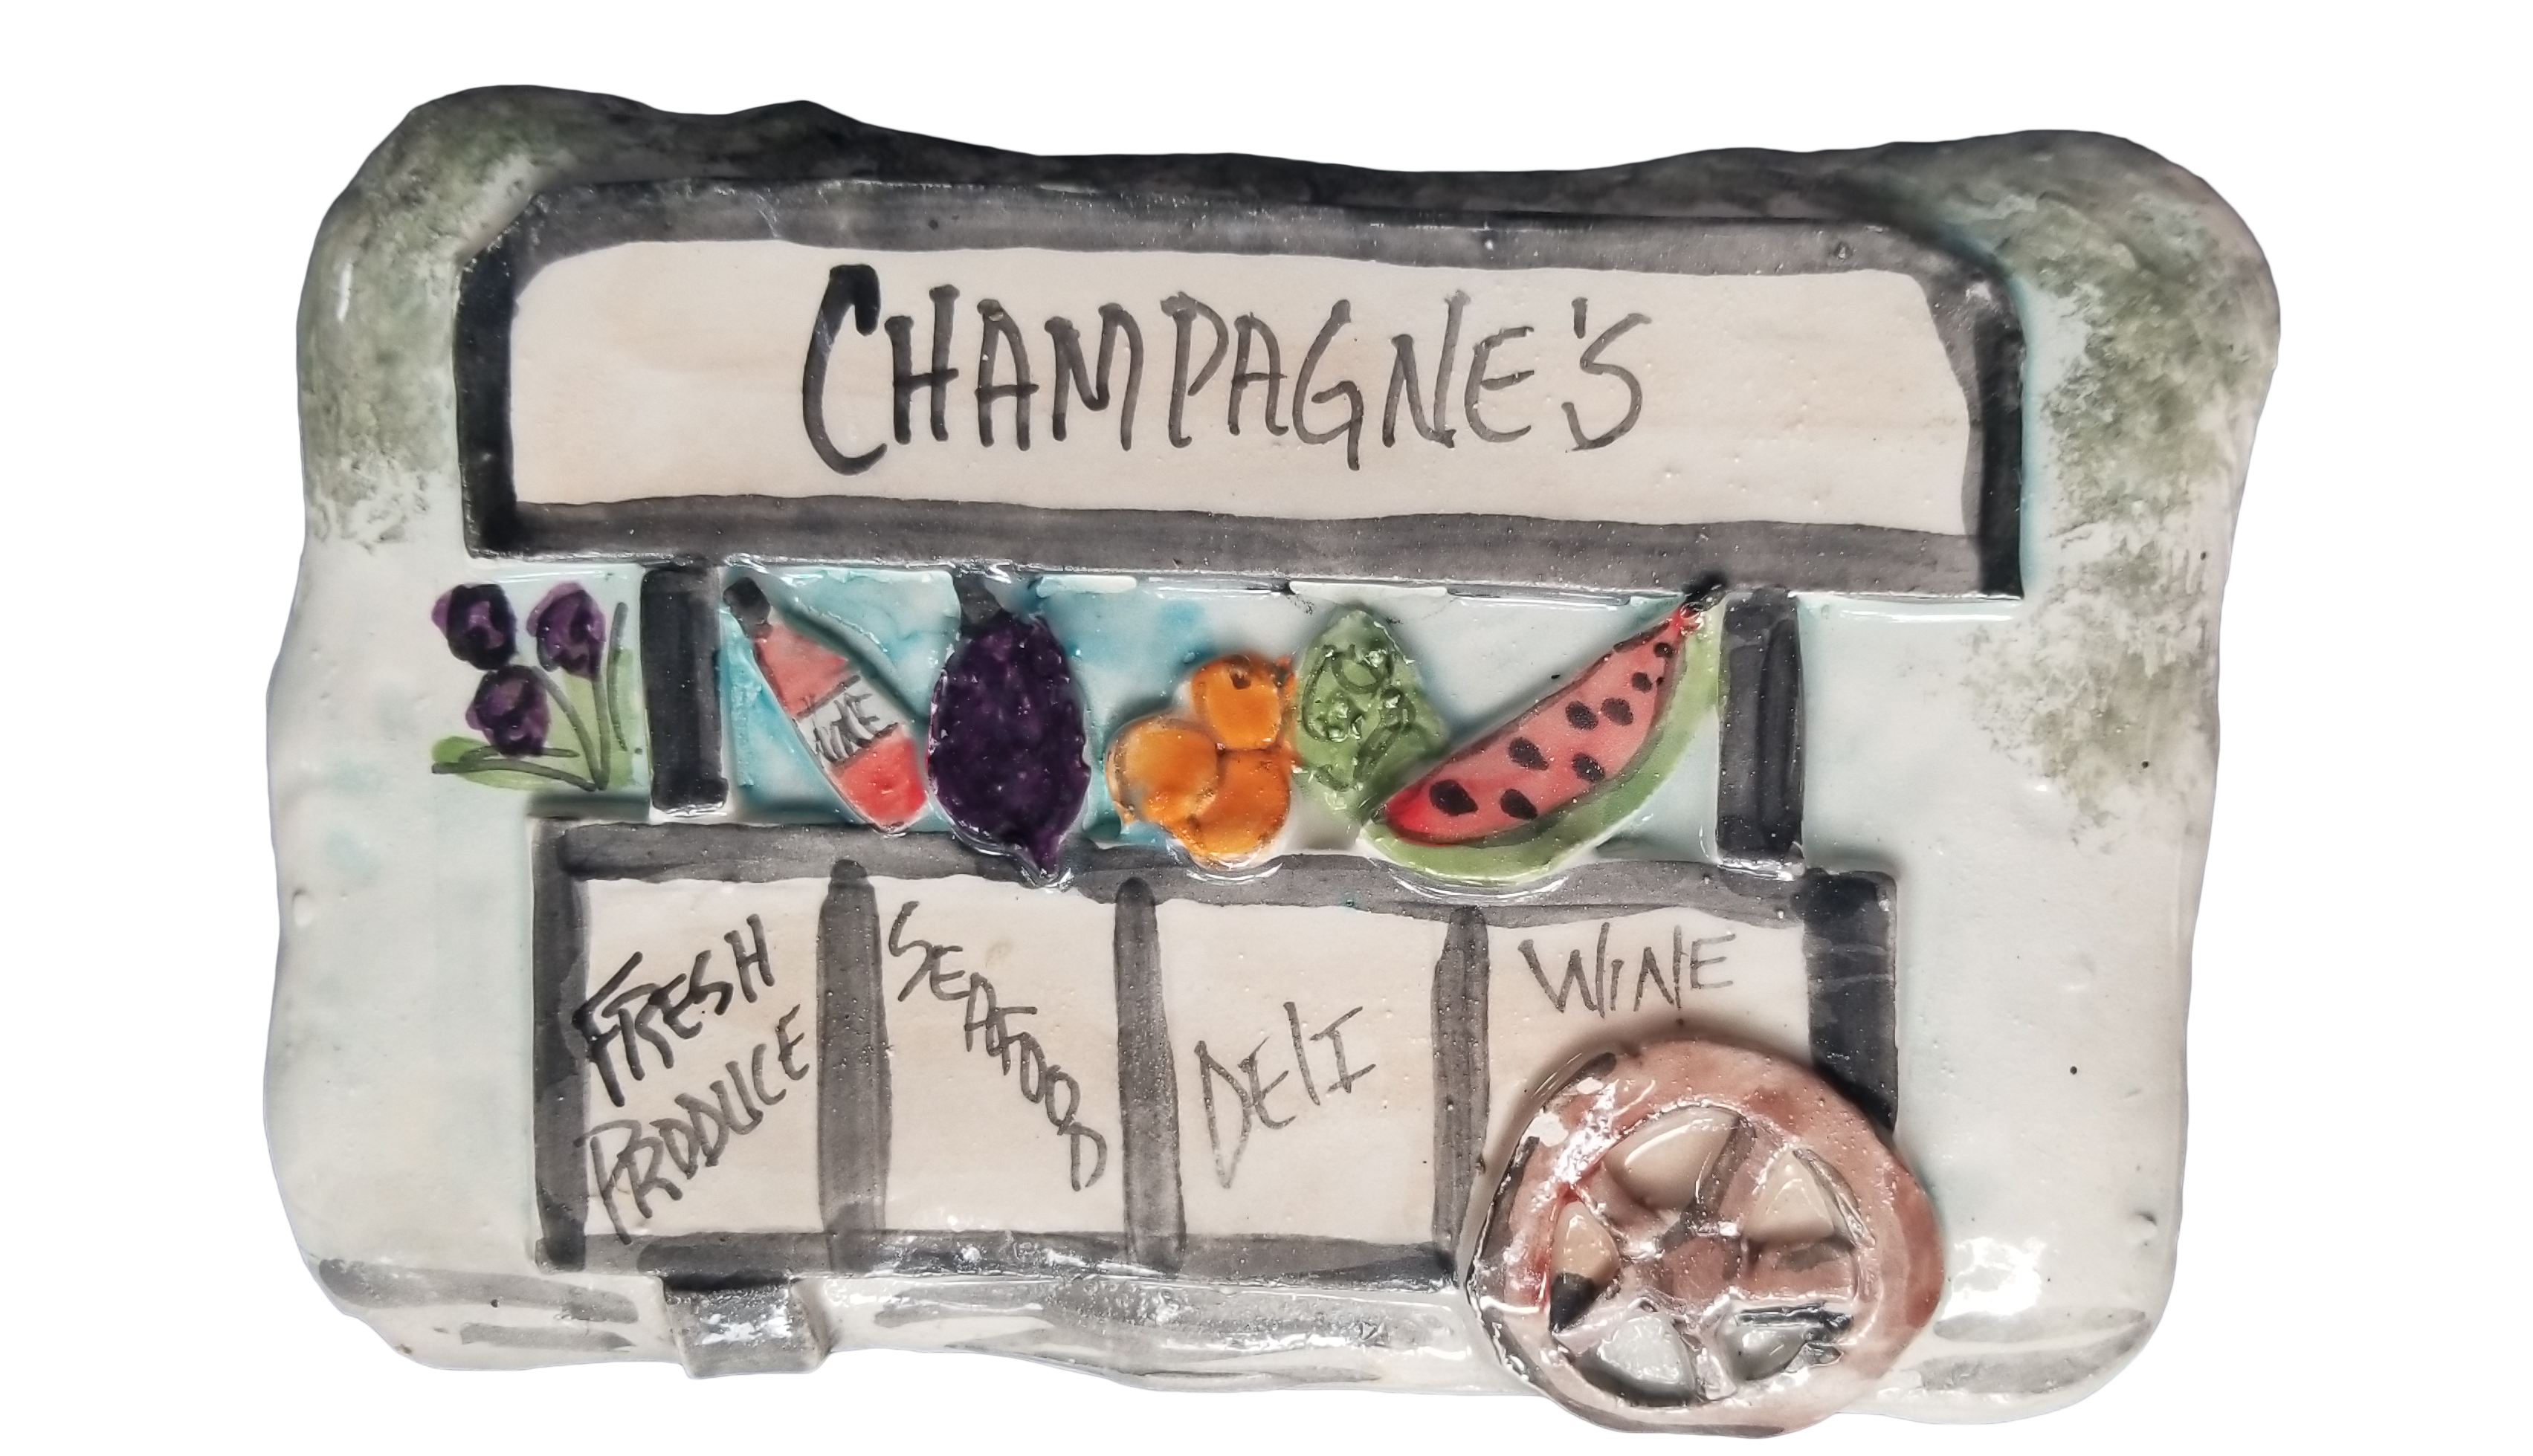 Champagne’s